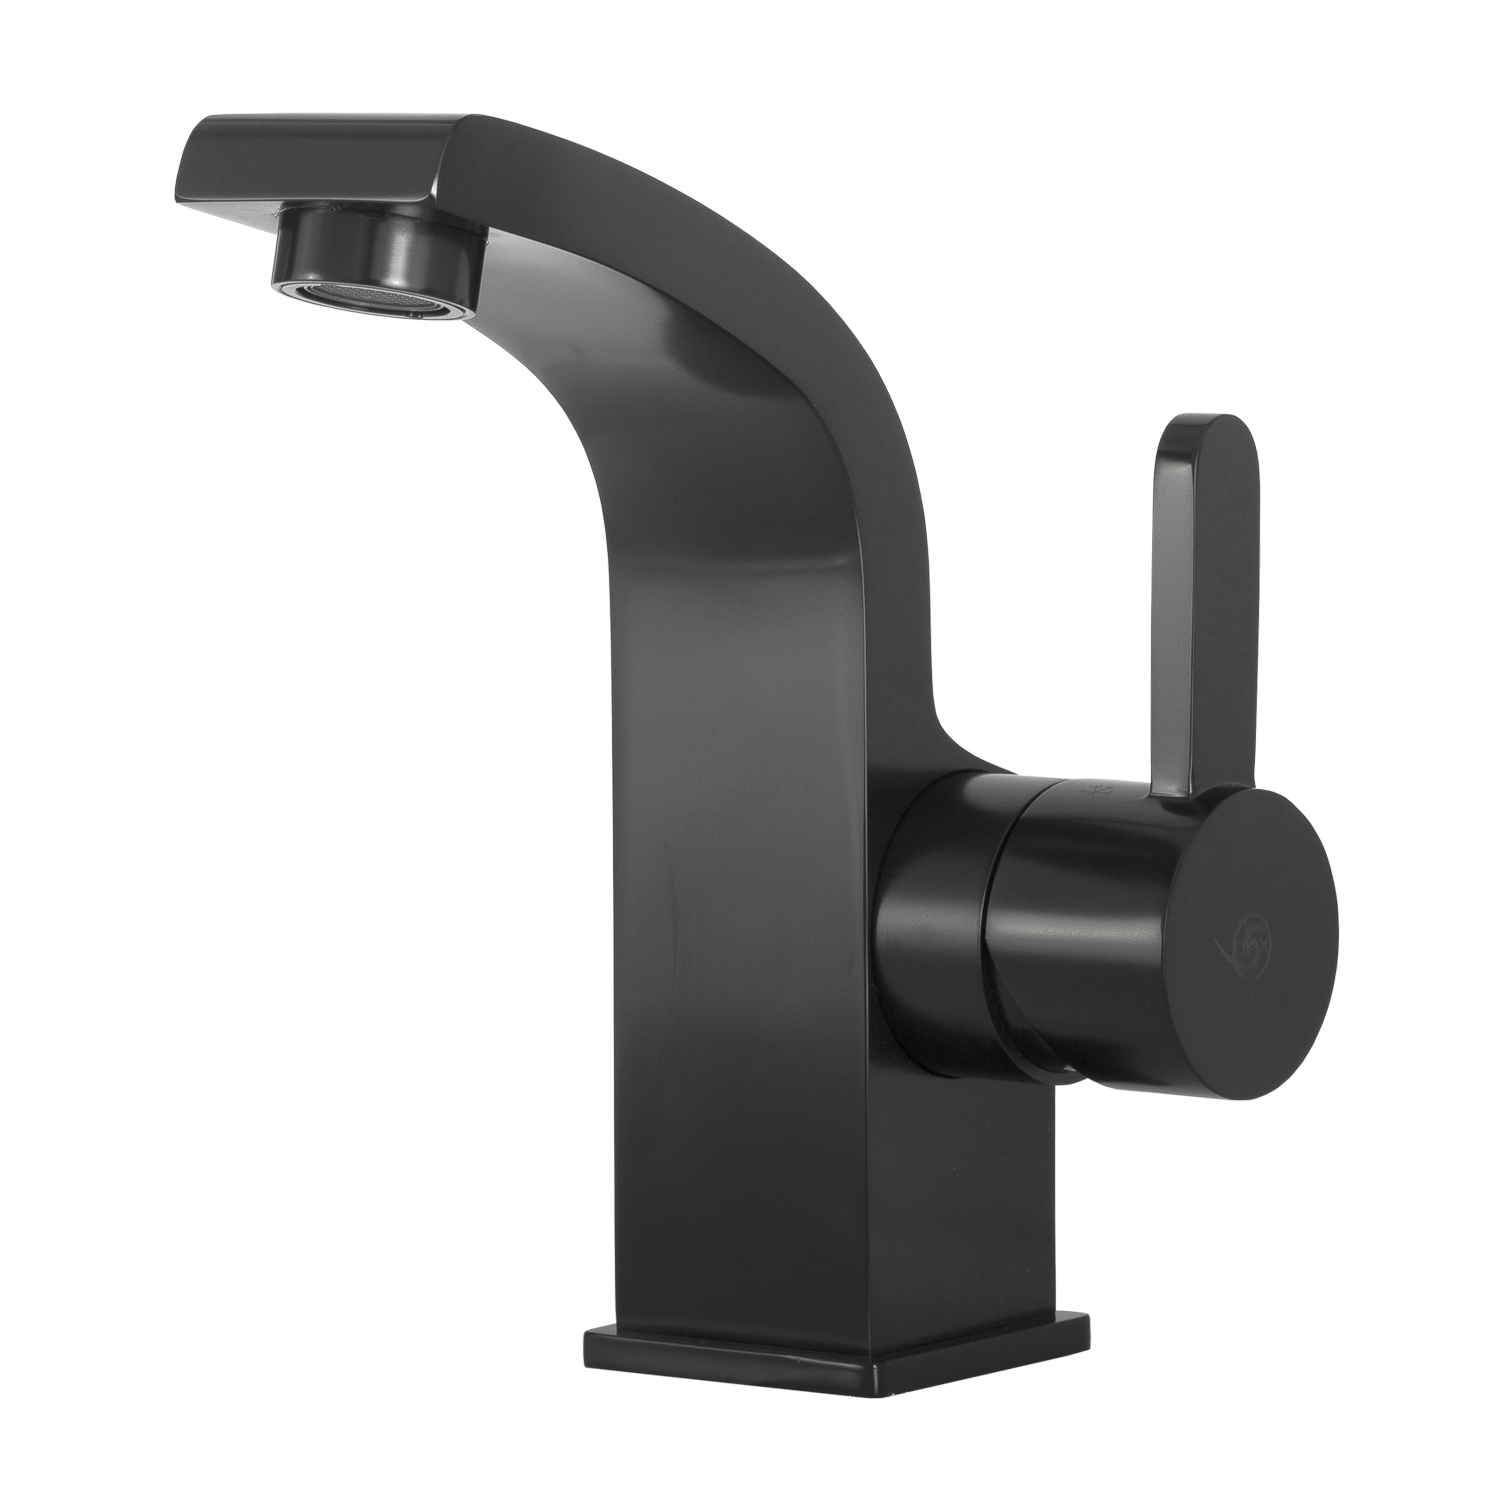 DAX Single Handle Bathroom Faucet, Brass Body, Matte Black Finish, 3-15/16 x 5-15/16 Inches (DAX-8260-PB)